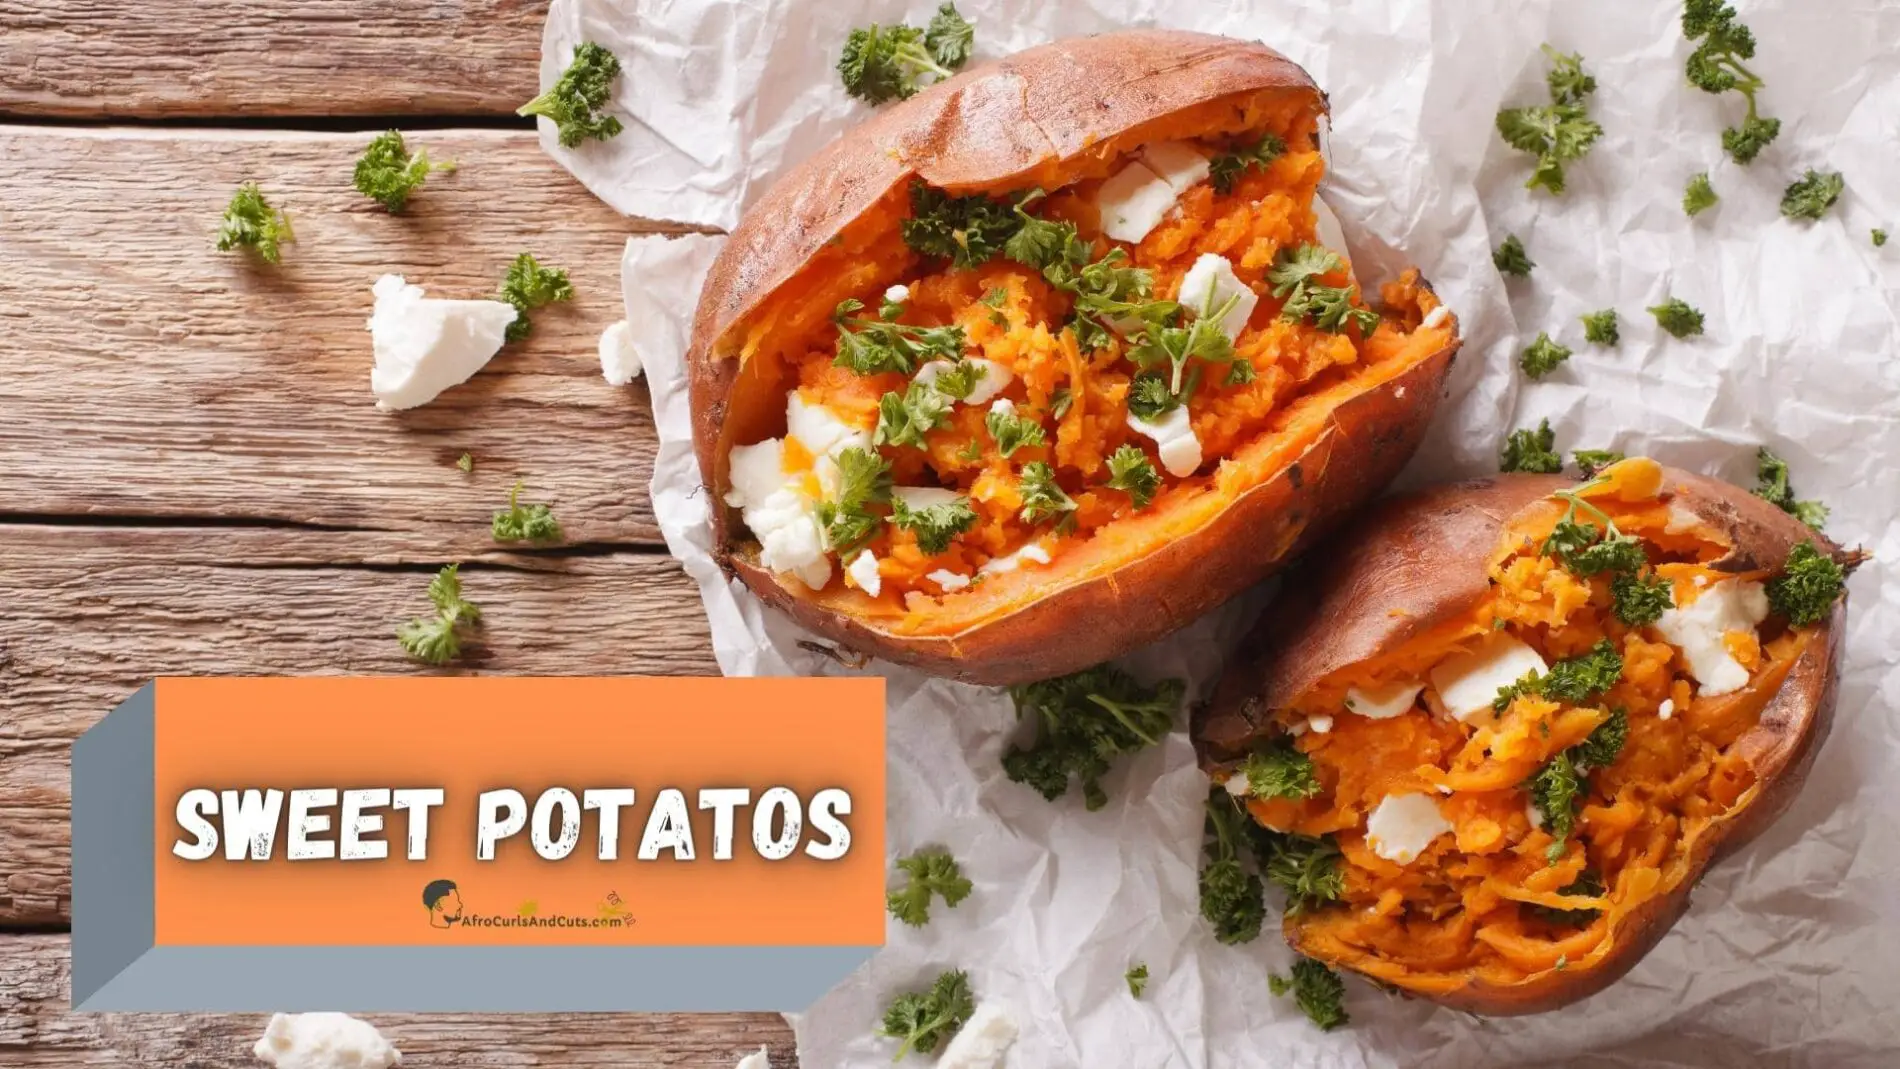 Sweet Potatoes reduce balding